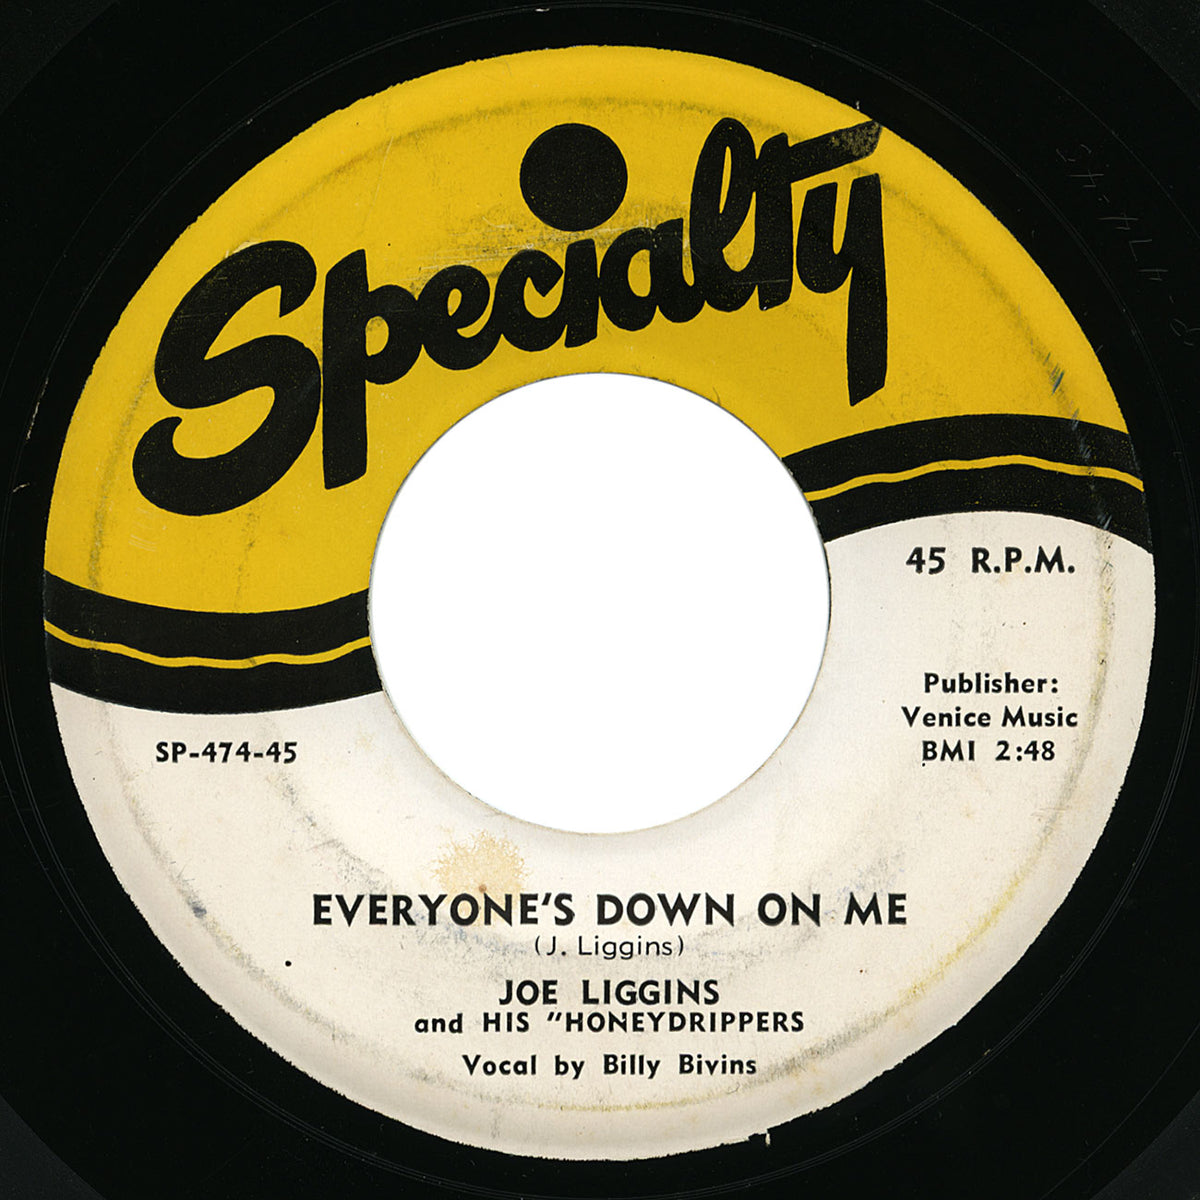 Joe Liggins – Everyone’s Down On Me – Specialty